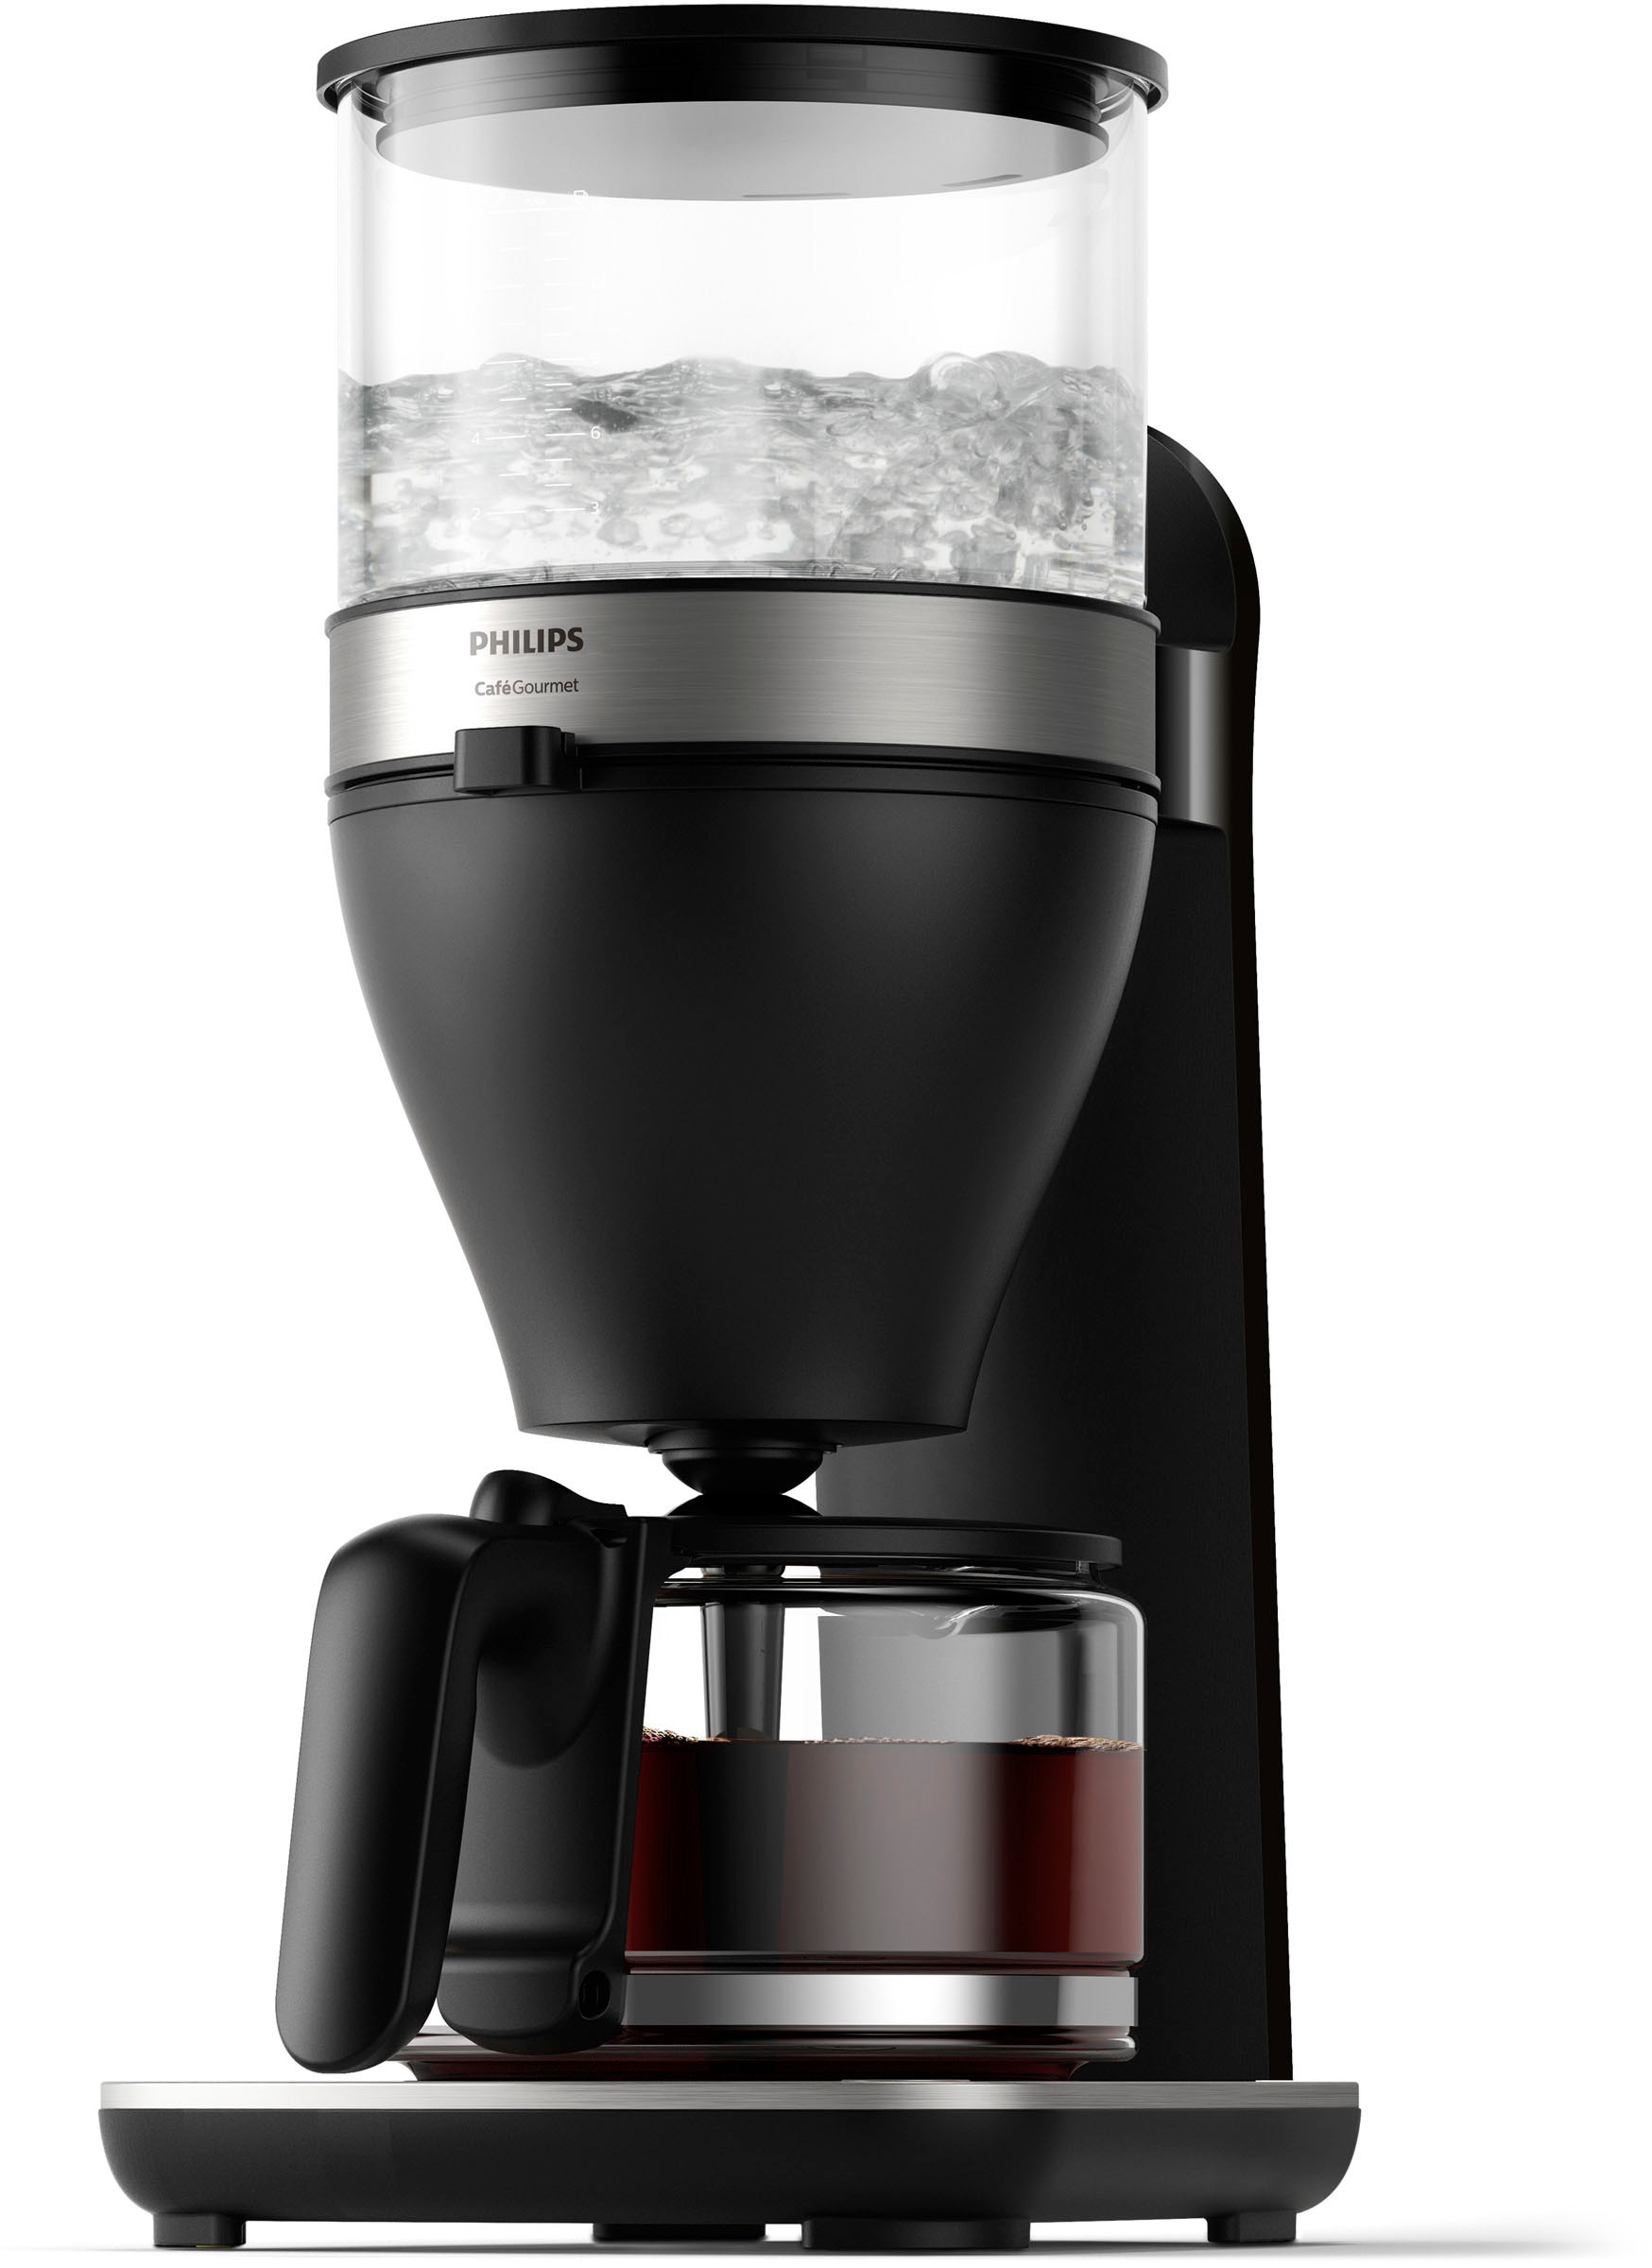 Philips Filterkaffeemaschine »Café Gourmet HD5416/60«, 1,25 l Kaffeekanne, Tropfstopp und Abschaltfunktion, Direkt-Brüh-Prinzip